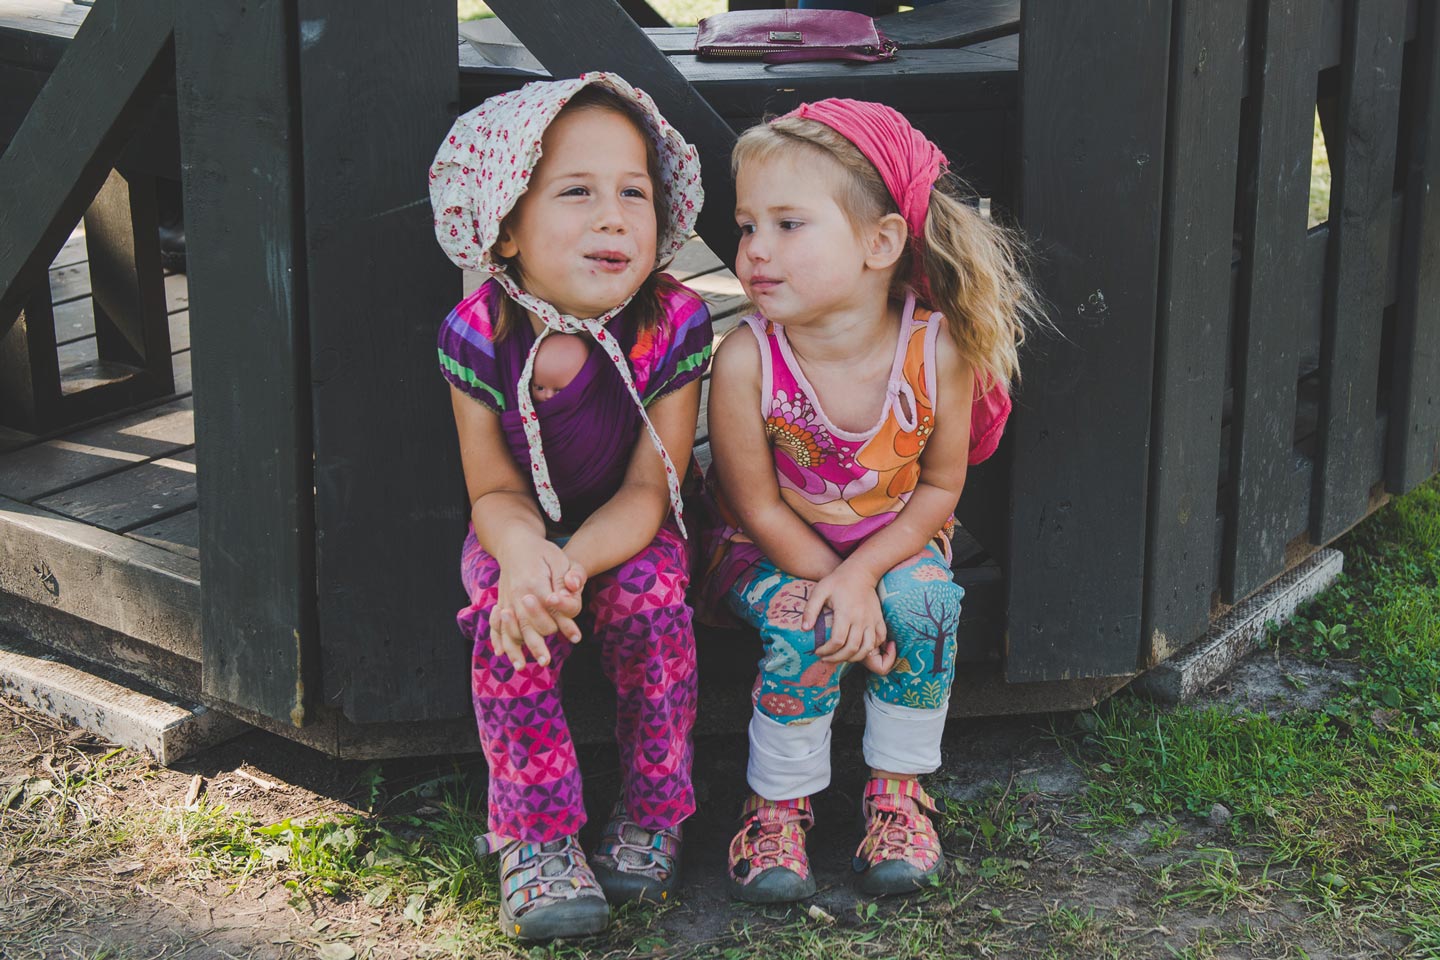 Little Girls Sitting Together Outside